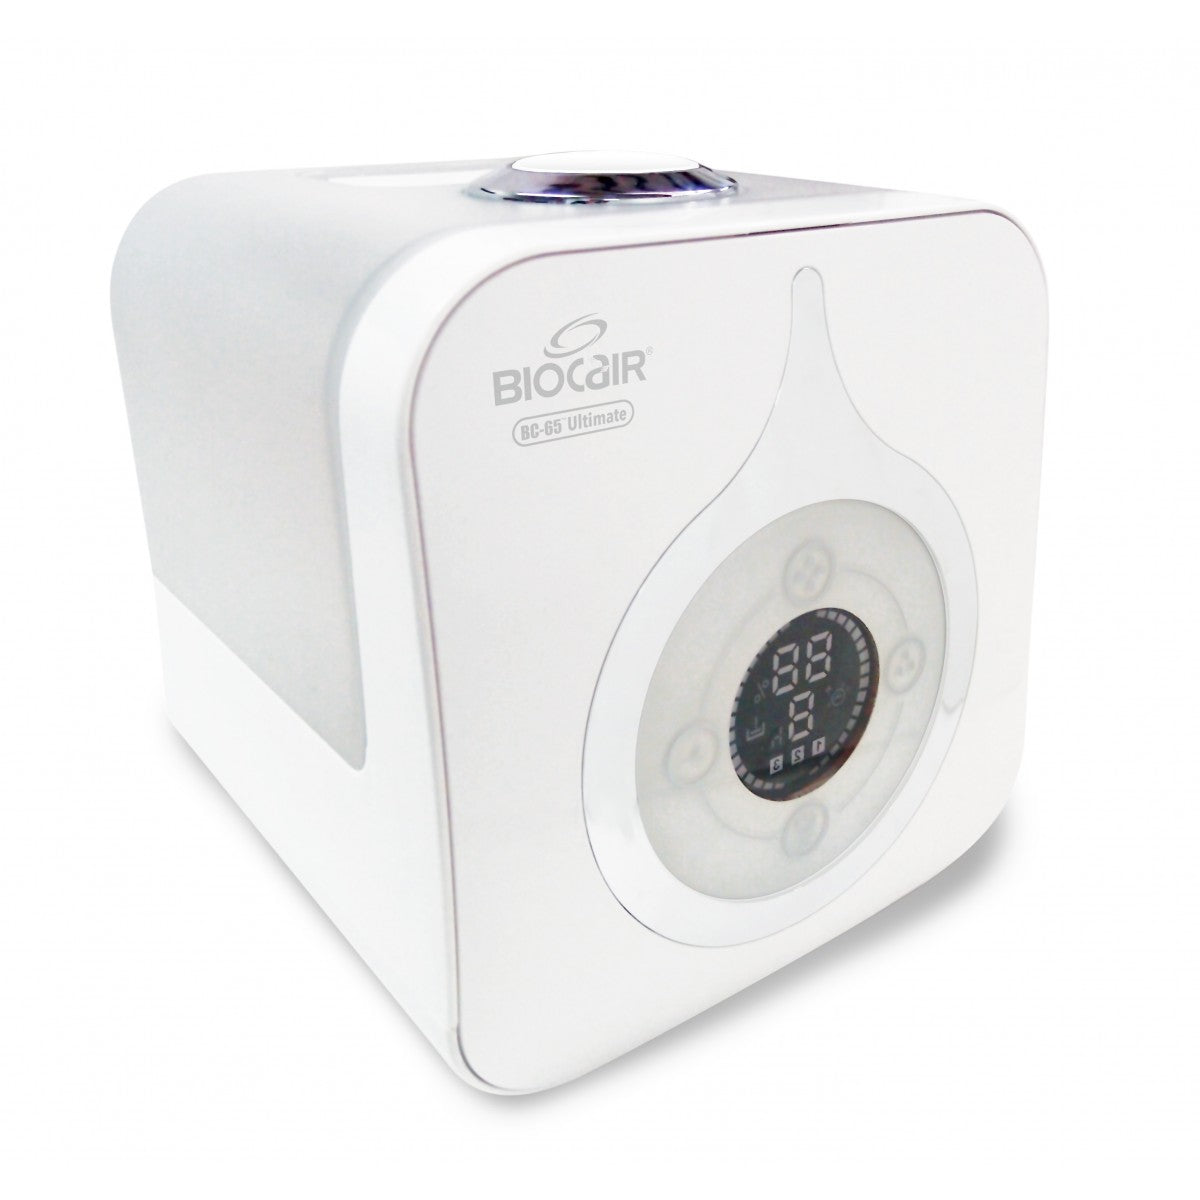 BiocAir BC-65 Ultimate Dry-Mist Disinfecting Machine + 2 APS (1L each)